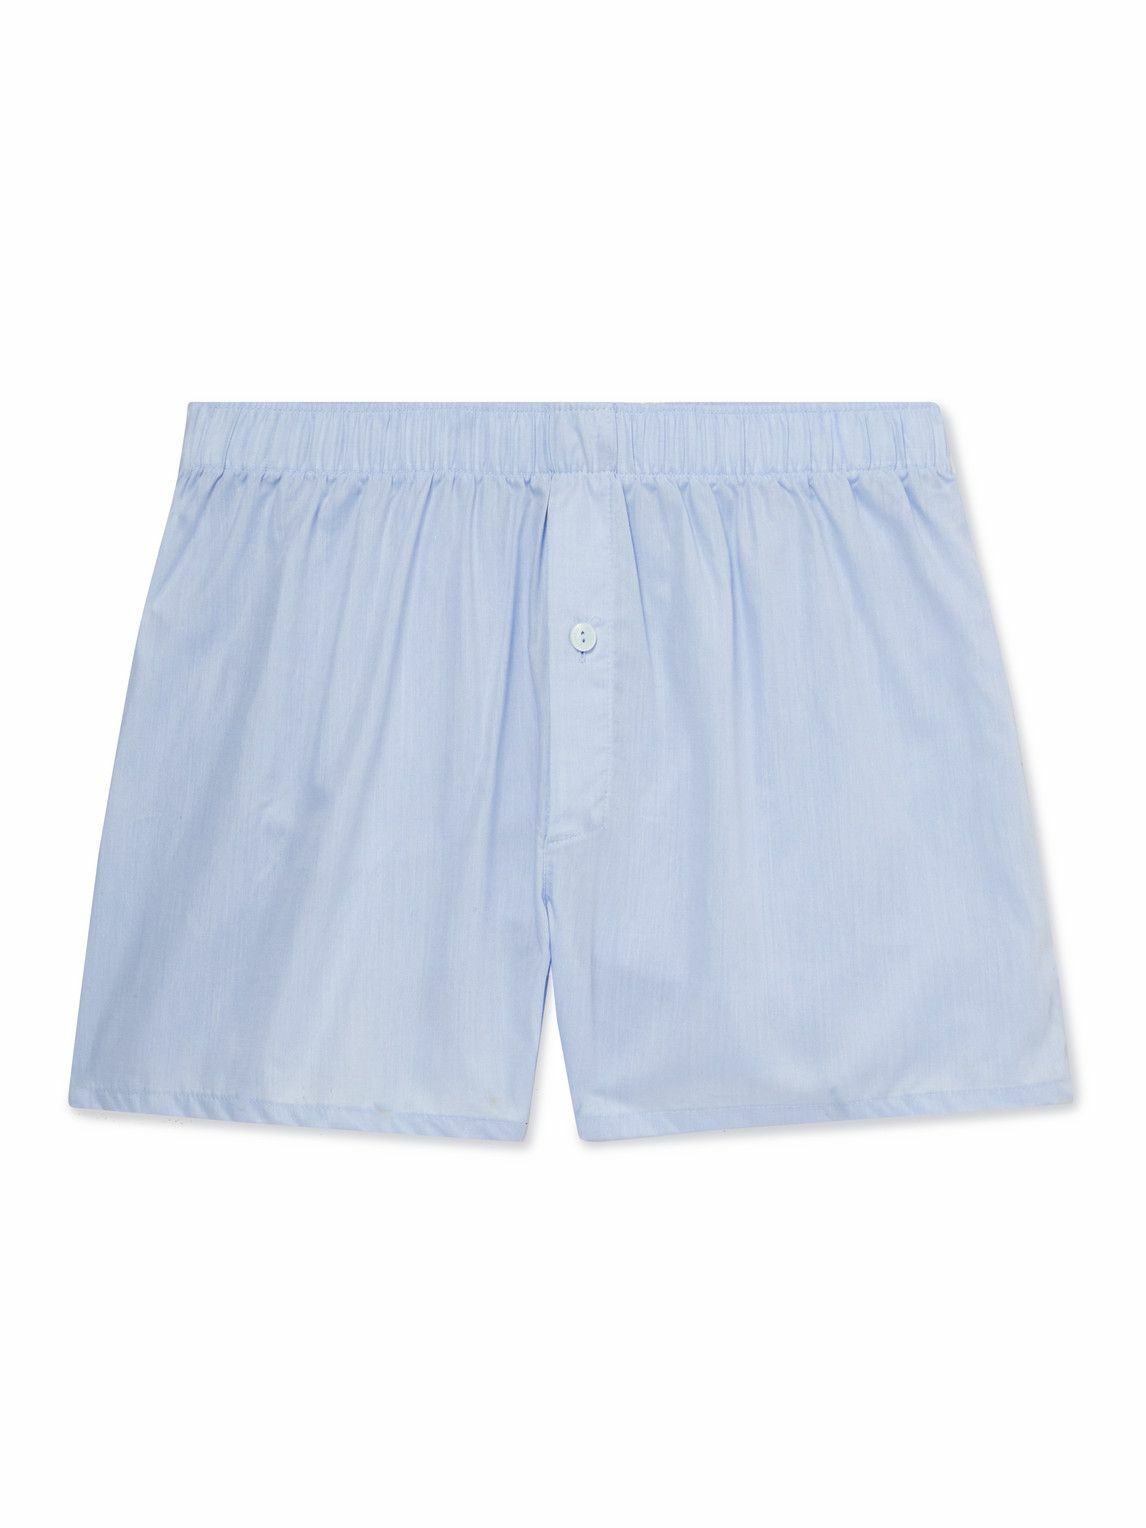 Hanro - Mercerised Cotton Boxer Shorts - Blue Hanro